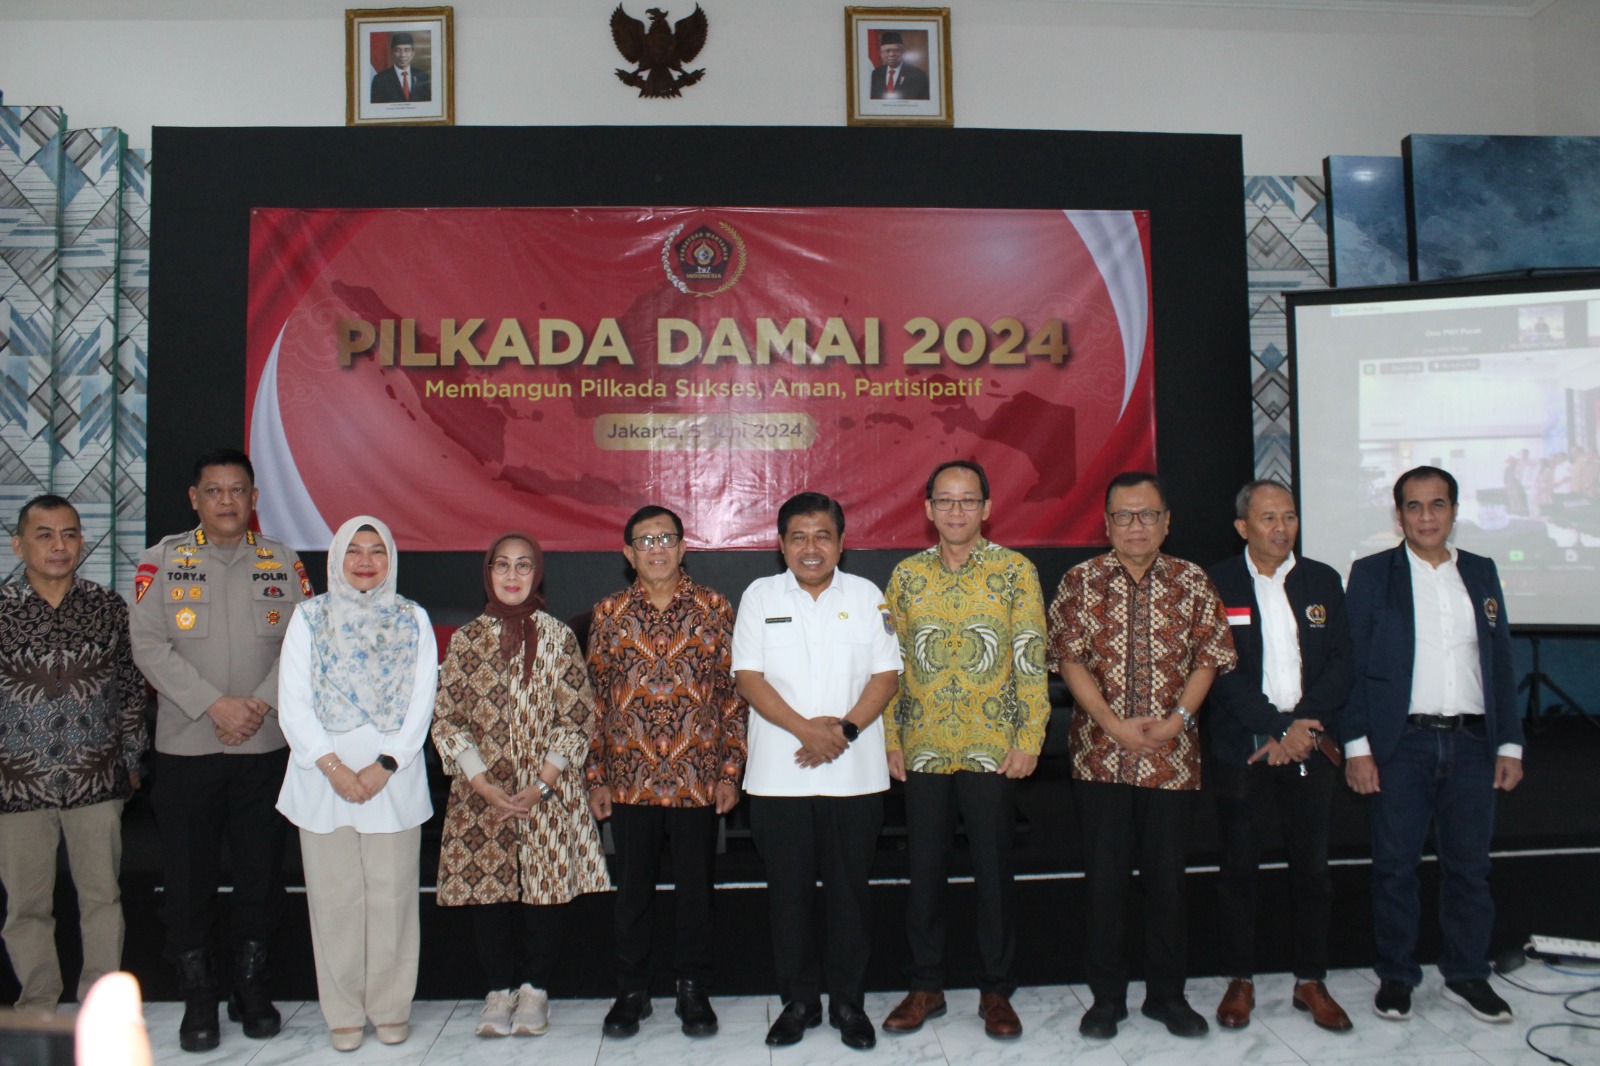 Seminar Pilkada Damai 2024 dengan tema "Membangun Pilkada Sukses, Aman Partisipatif" di Hall Dewan Pers, Jalan Kebon Sirih, Jakarta Pusat, Rabu (5/6/2024). 